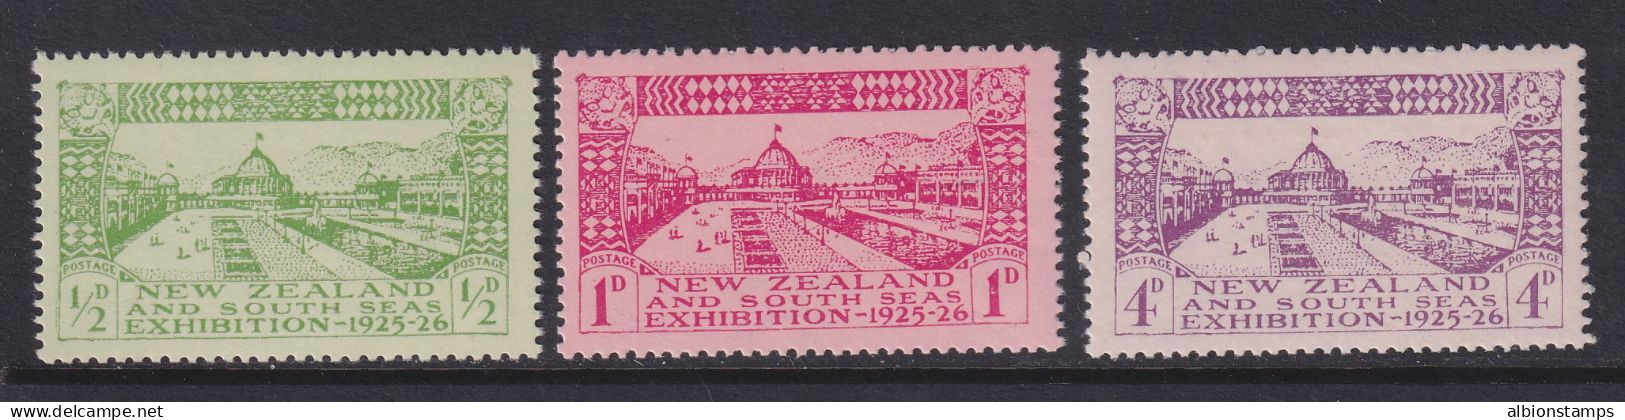 New Zealand, Scott 179-181 (SG 463-465), MNH - Nuovi